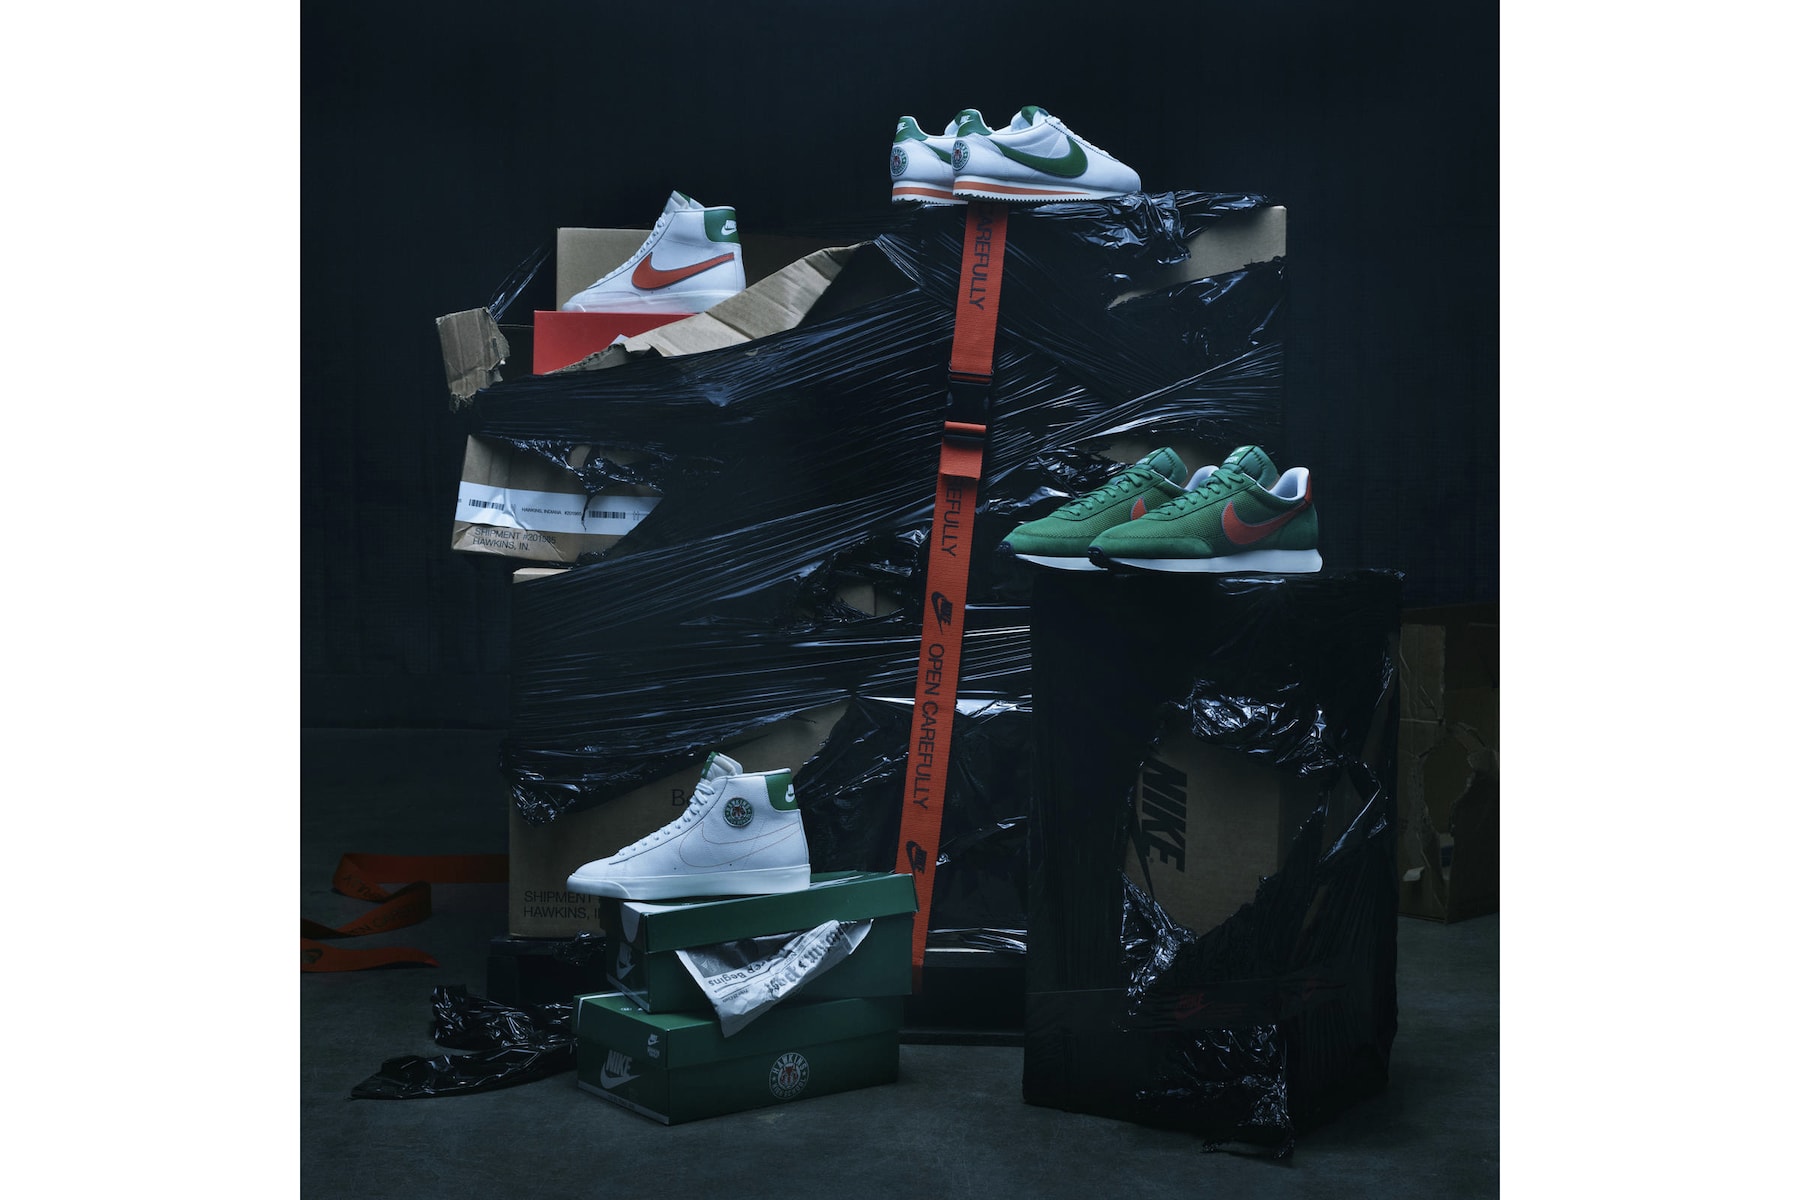 Stranger Things x Nike Collection Release Date Cortez Blazer Tailwind Capsule Drop Sneakers Trainers Netflix Footwear Apparel PE Uniform Retro Sporty 